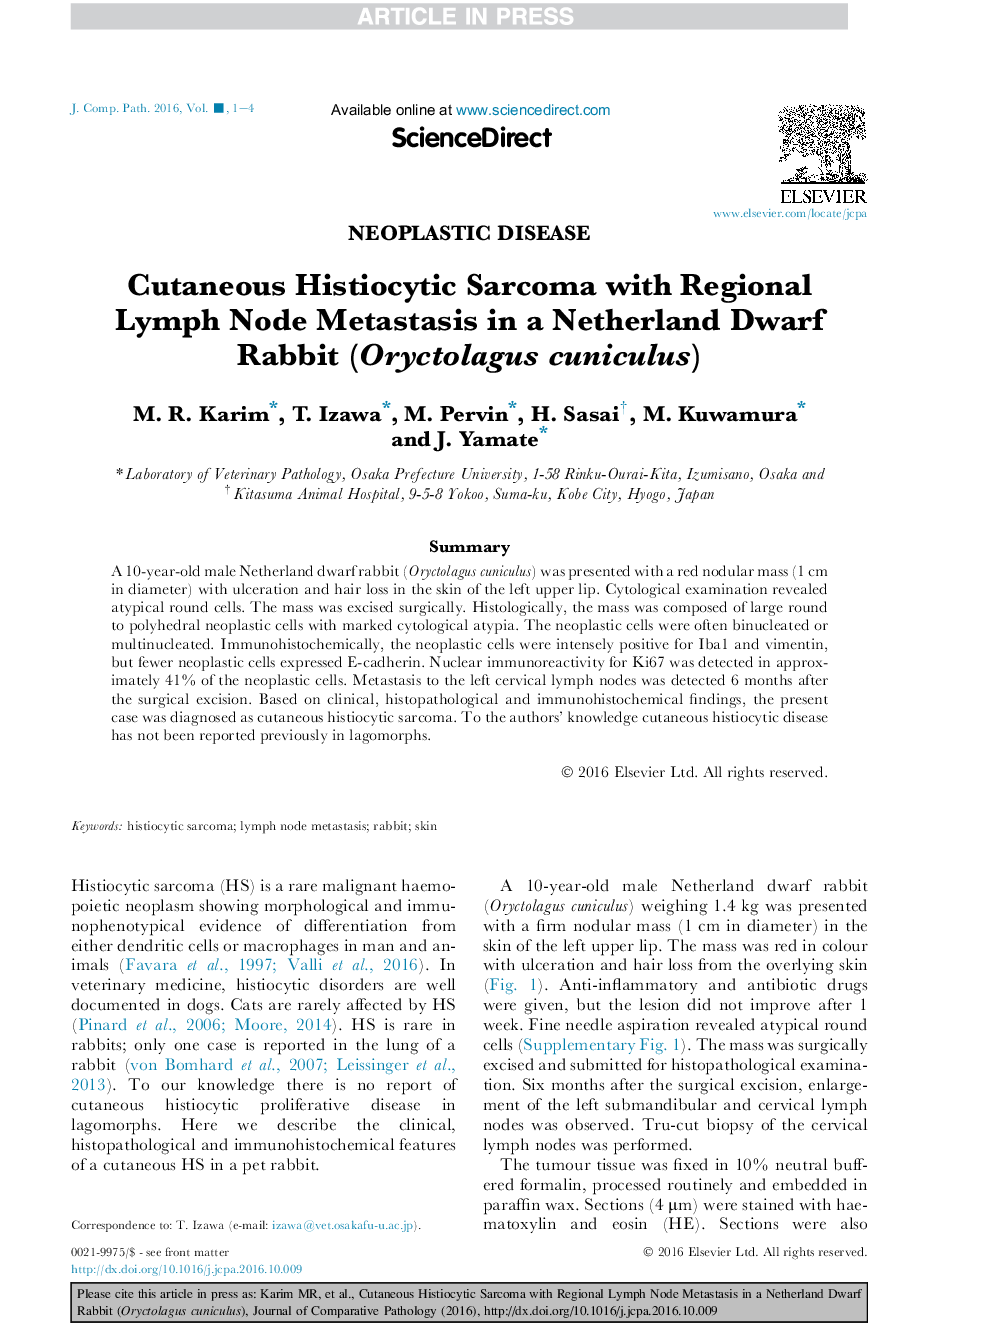 Cutaneous Histiocytic Sarcoma with Regional Lymph Node Metastasis in a Netherland Dwarf Rabbit (Oryctolagus cuniculus)